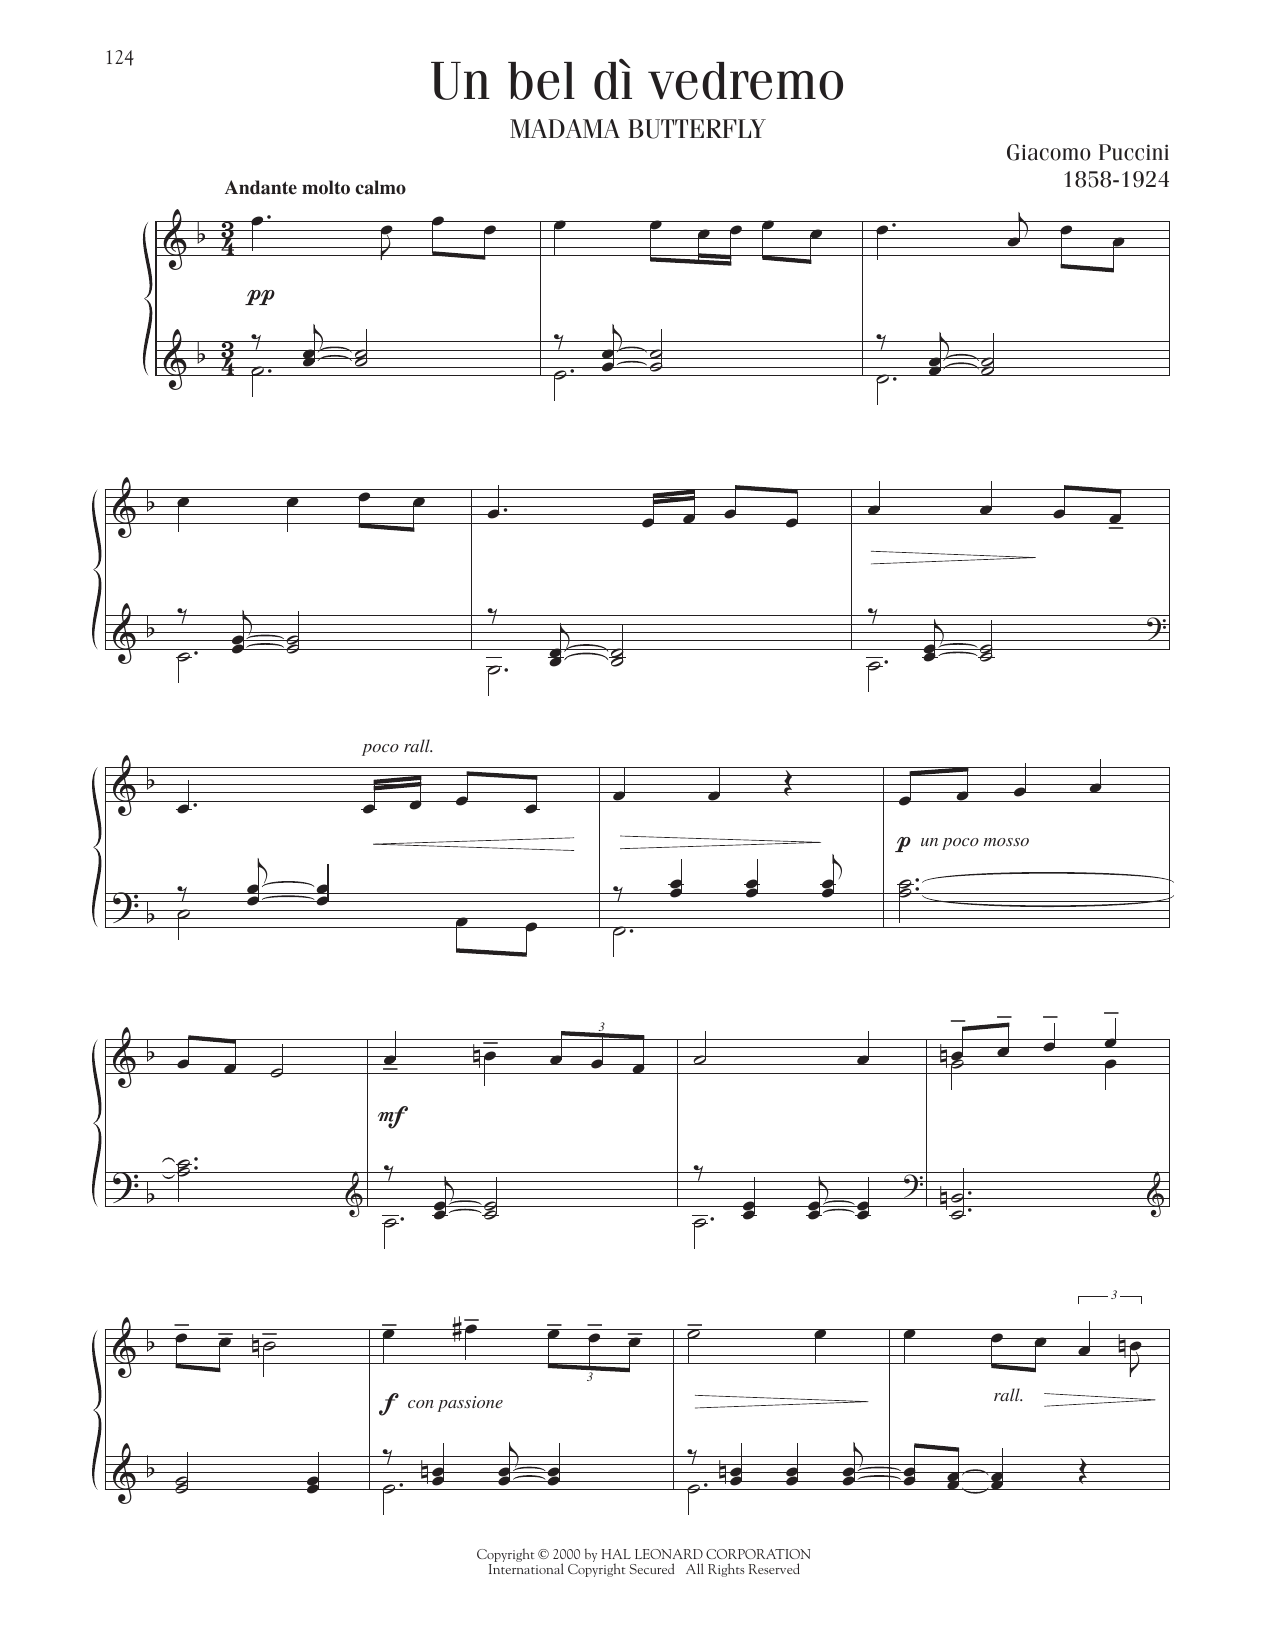 Giacomo Puccini Un Bel Di Vedremo sheet music notes printable PDF score